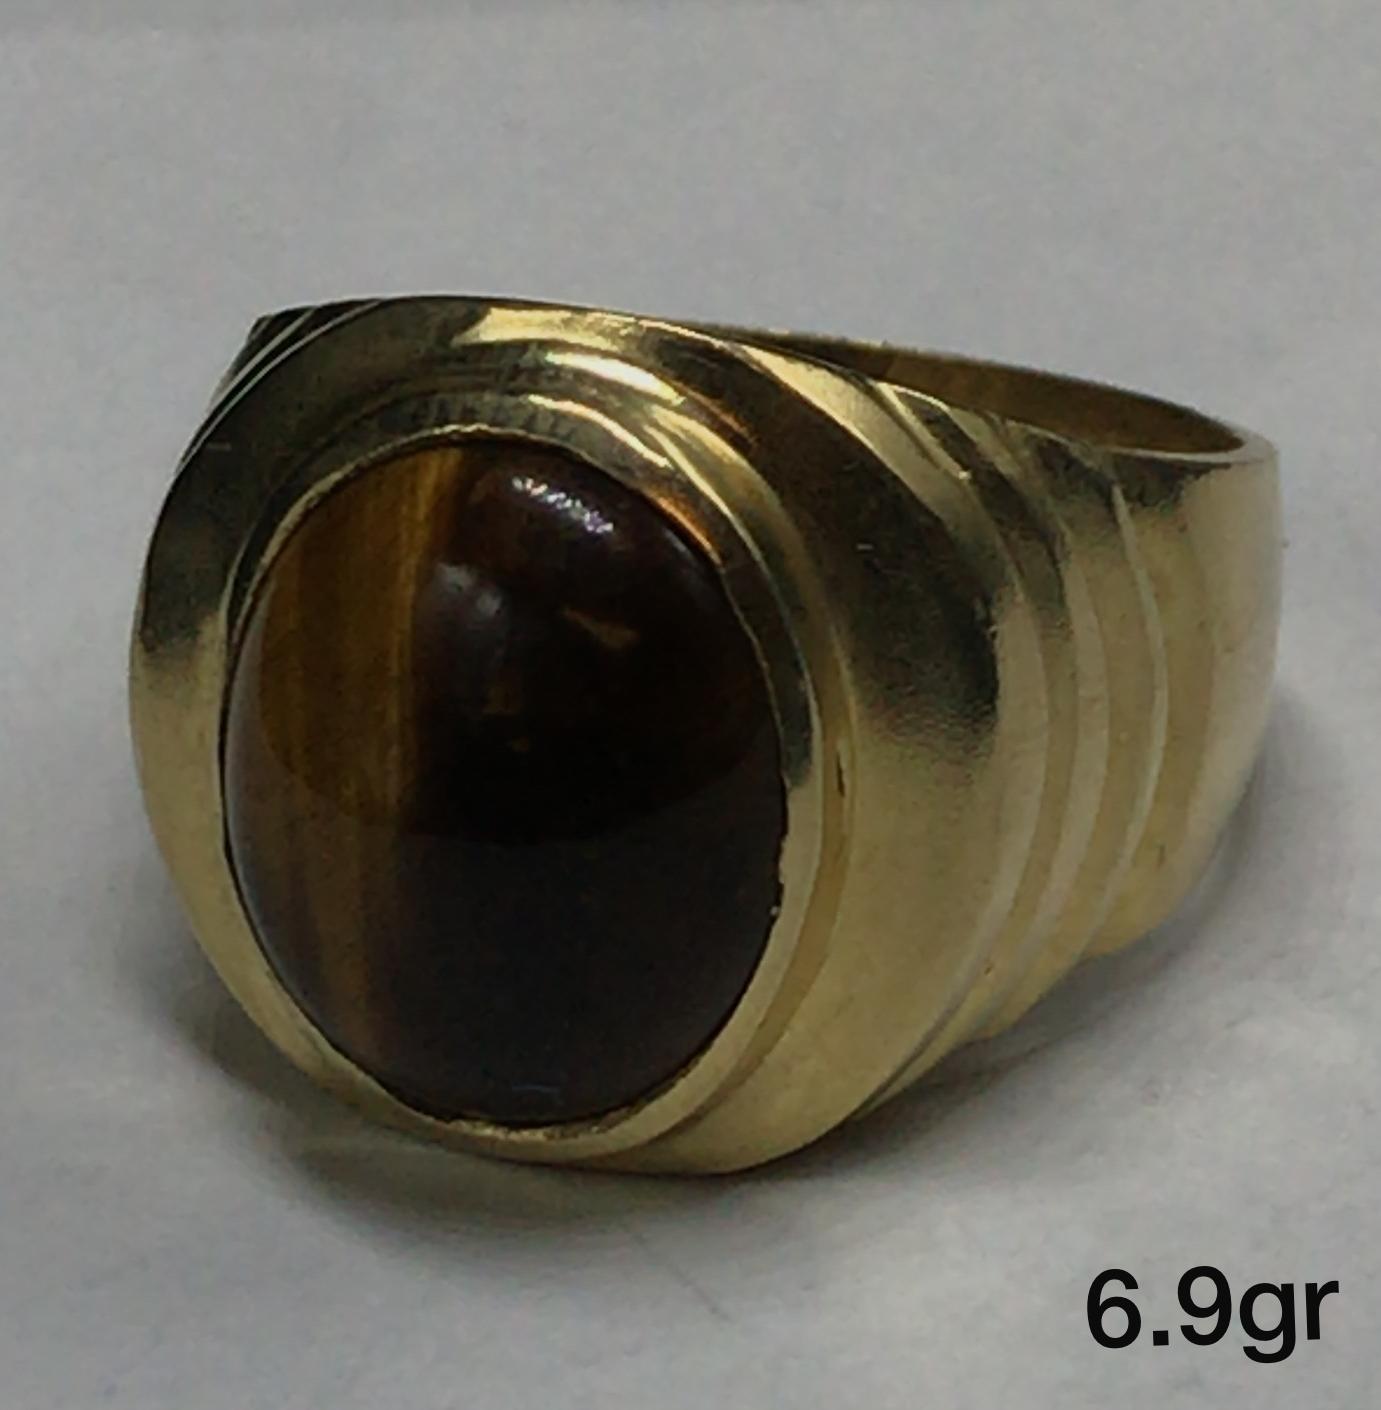 10K Gold Brown Stone Ring